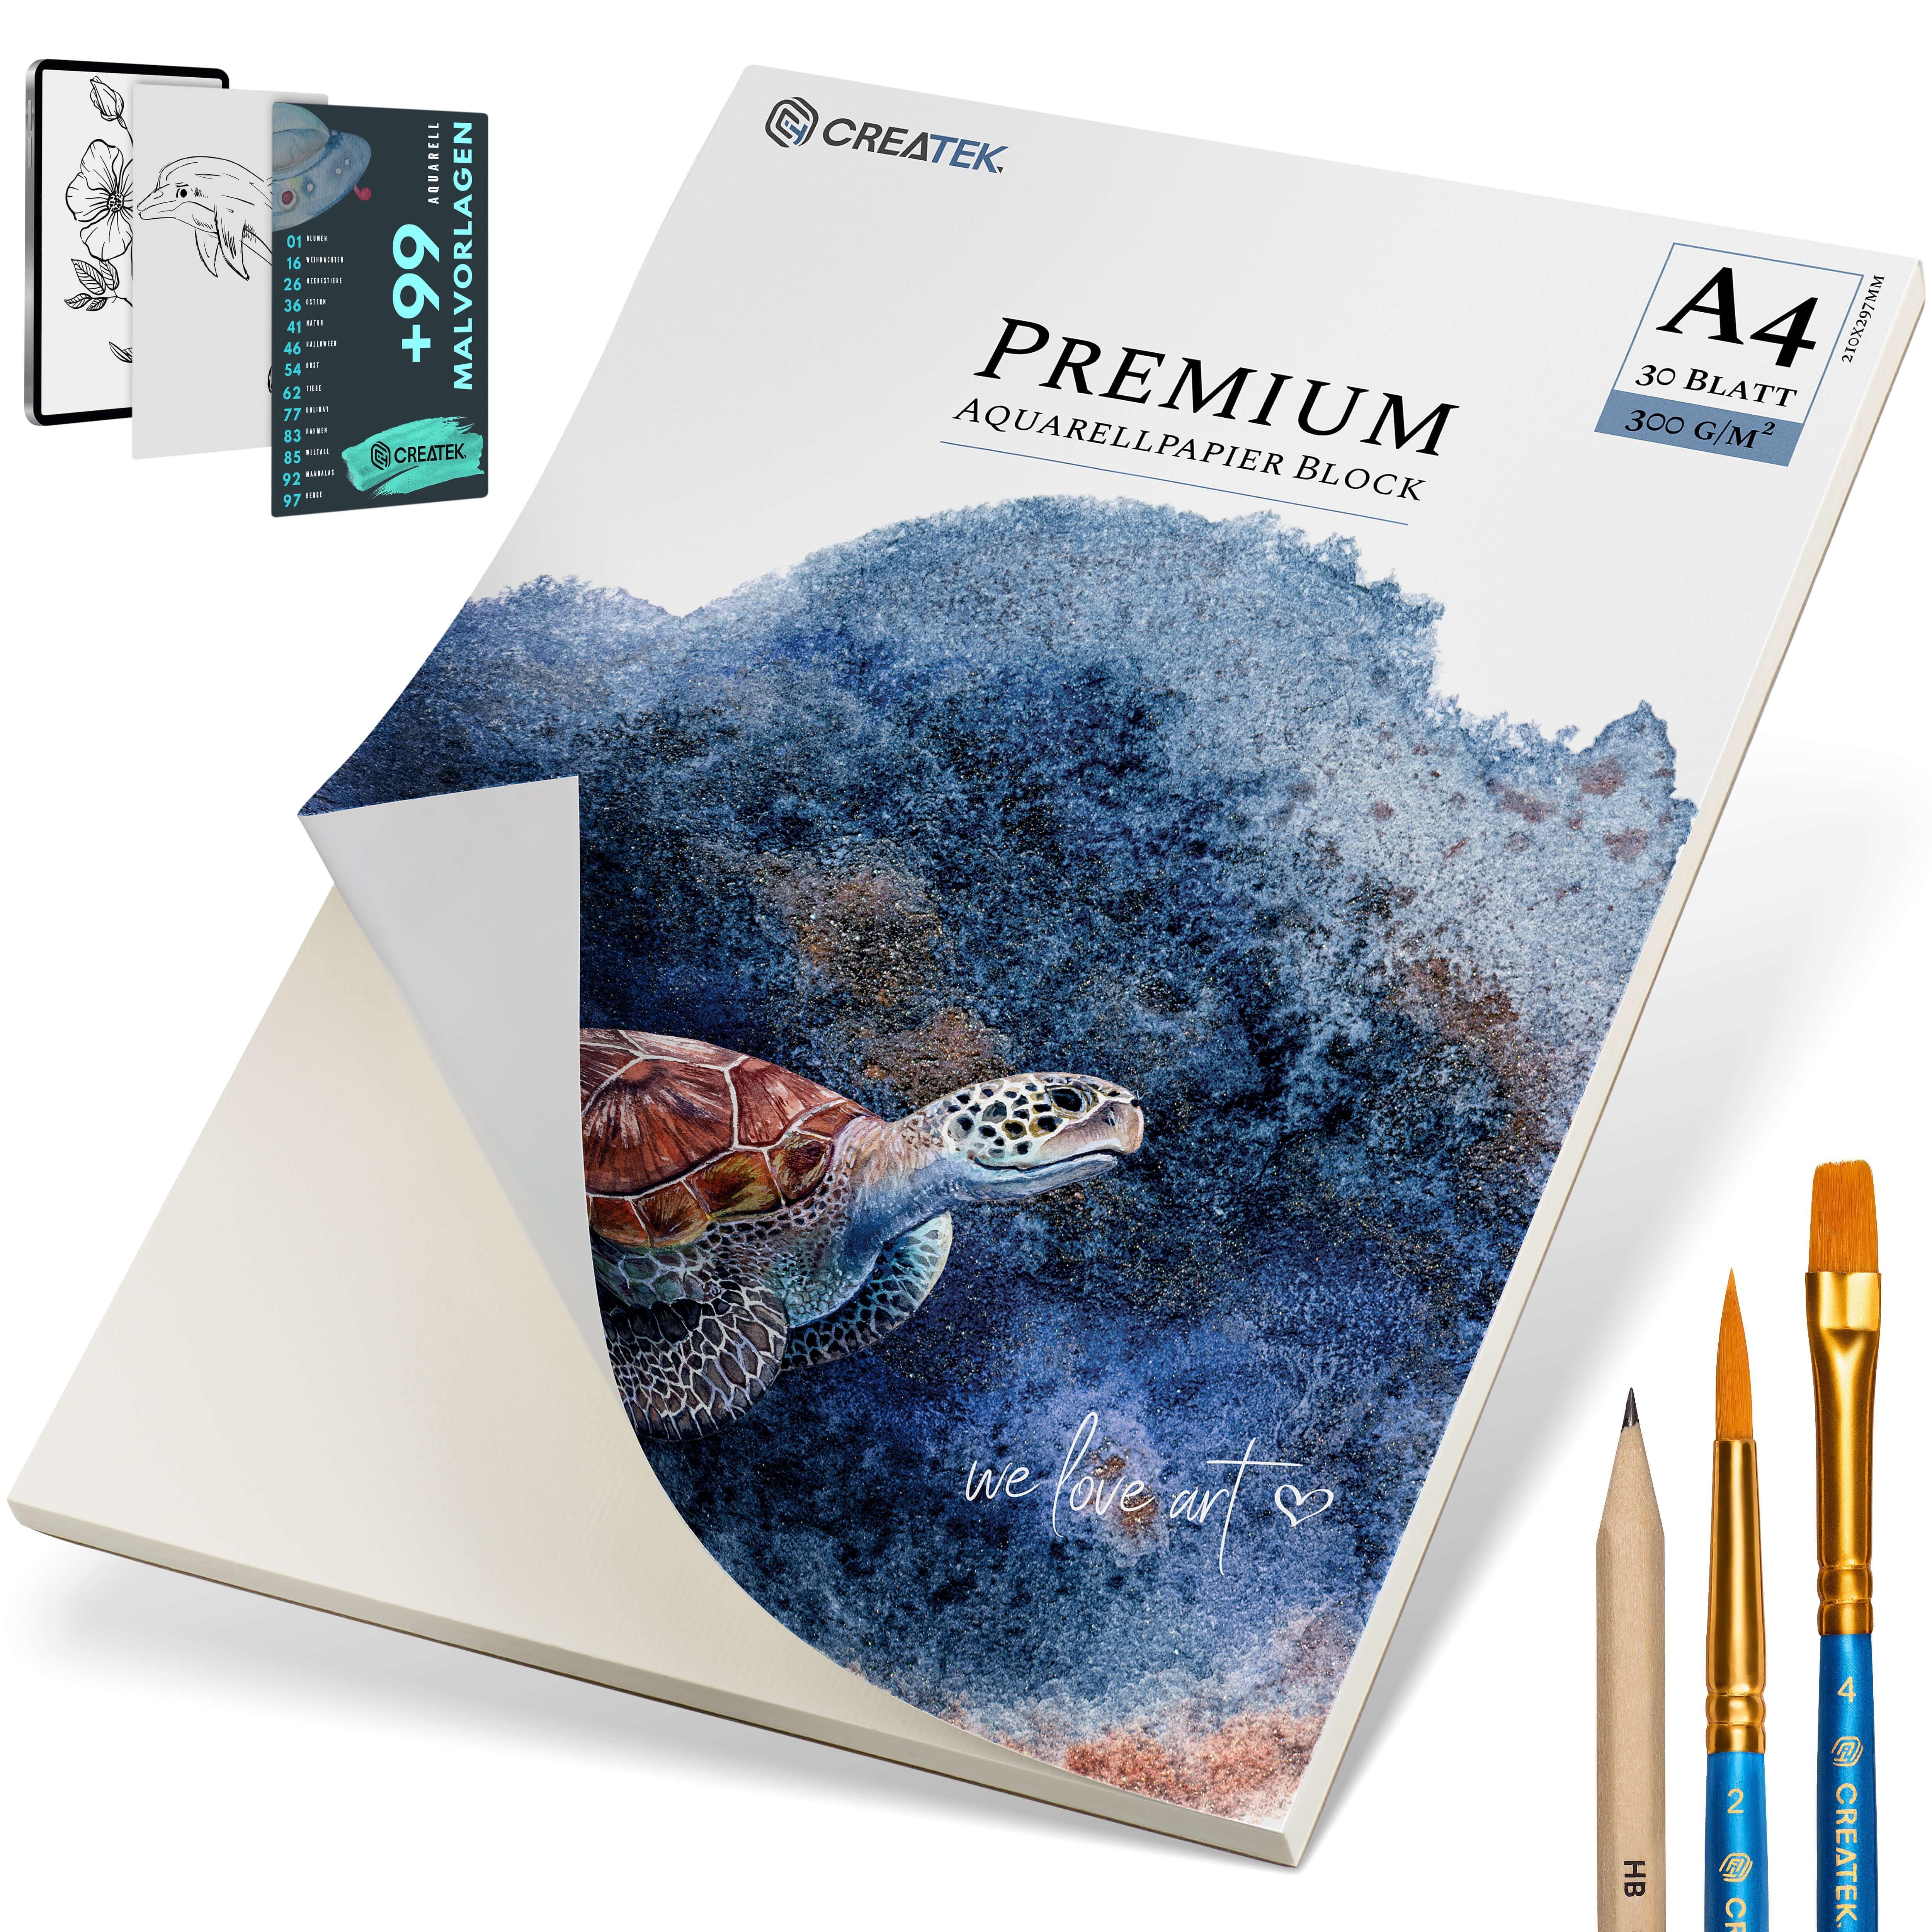 CreaTek Aquarellpapier 300g diverse Größen - Premium Qualität inkl. Pinsel & Bleistift uvm., 2 STUNDEN VIDEOKURS + 400 MALVORLAGEN | Papier